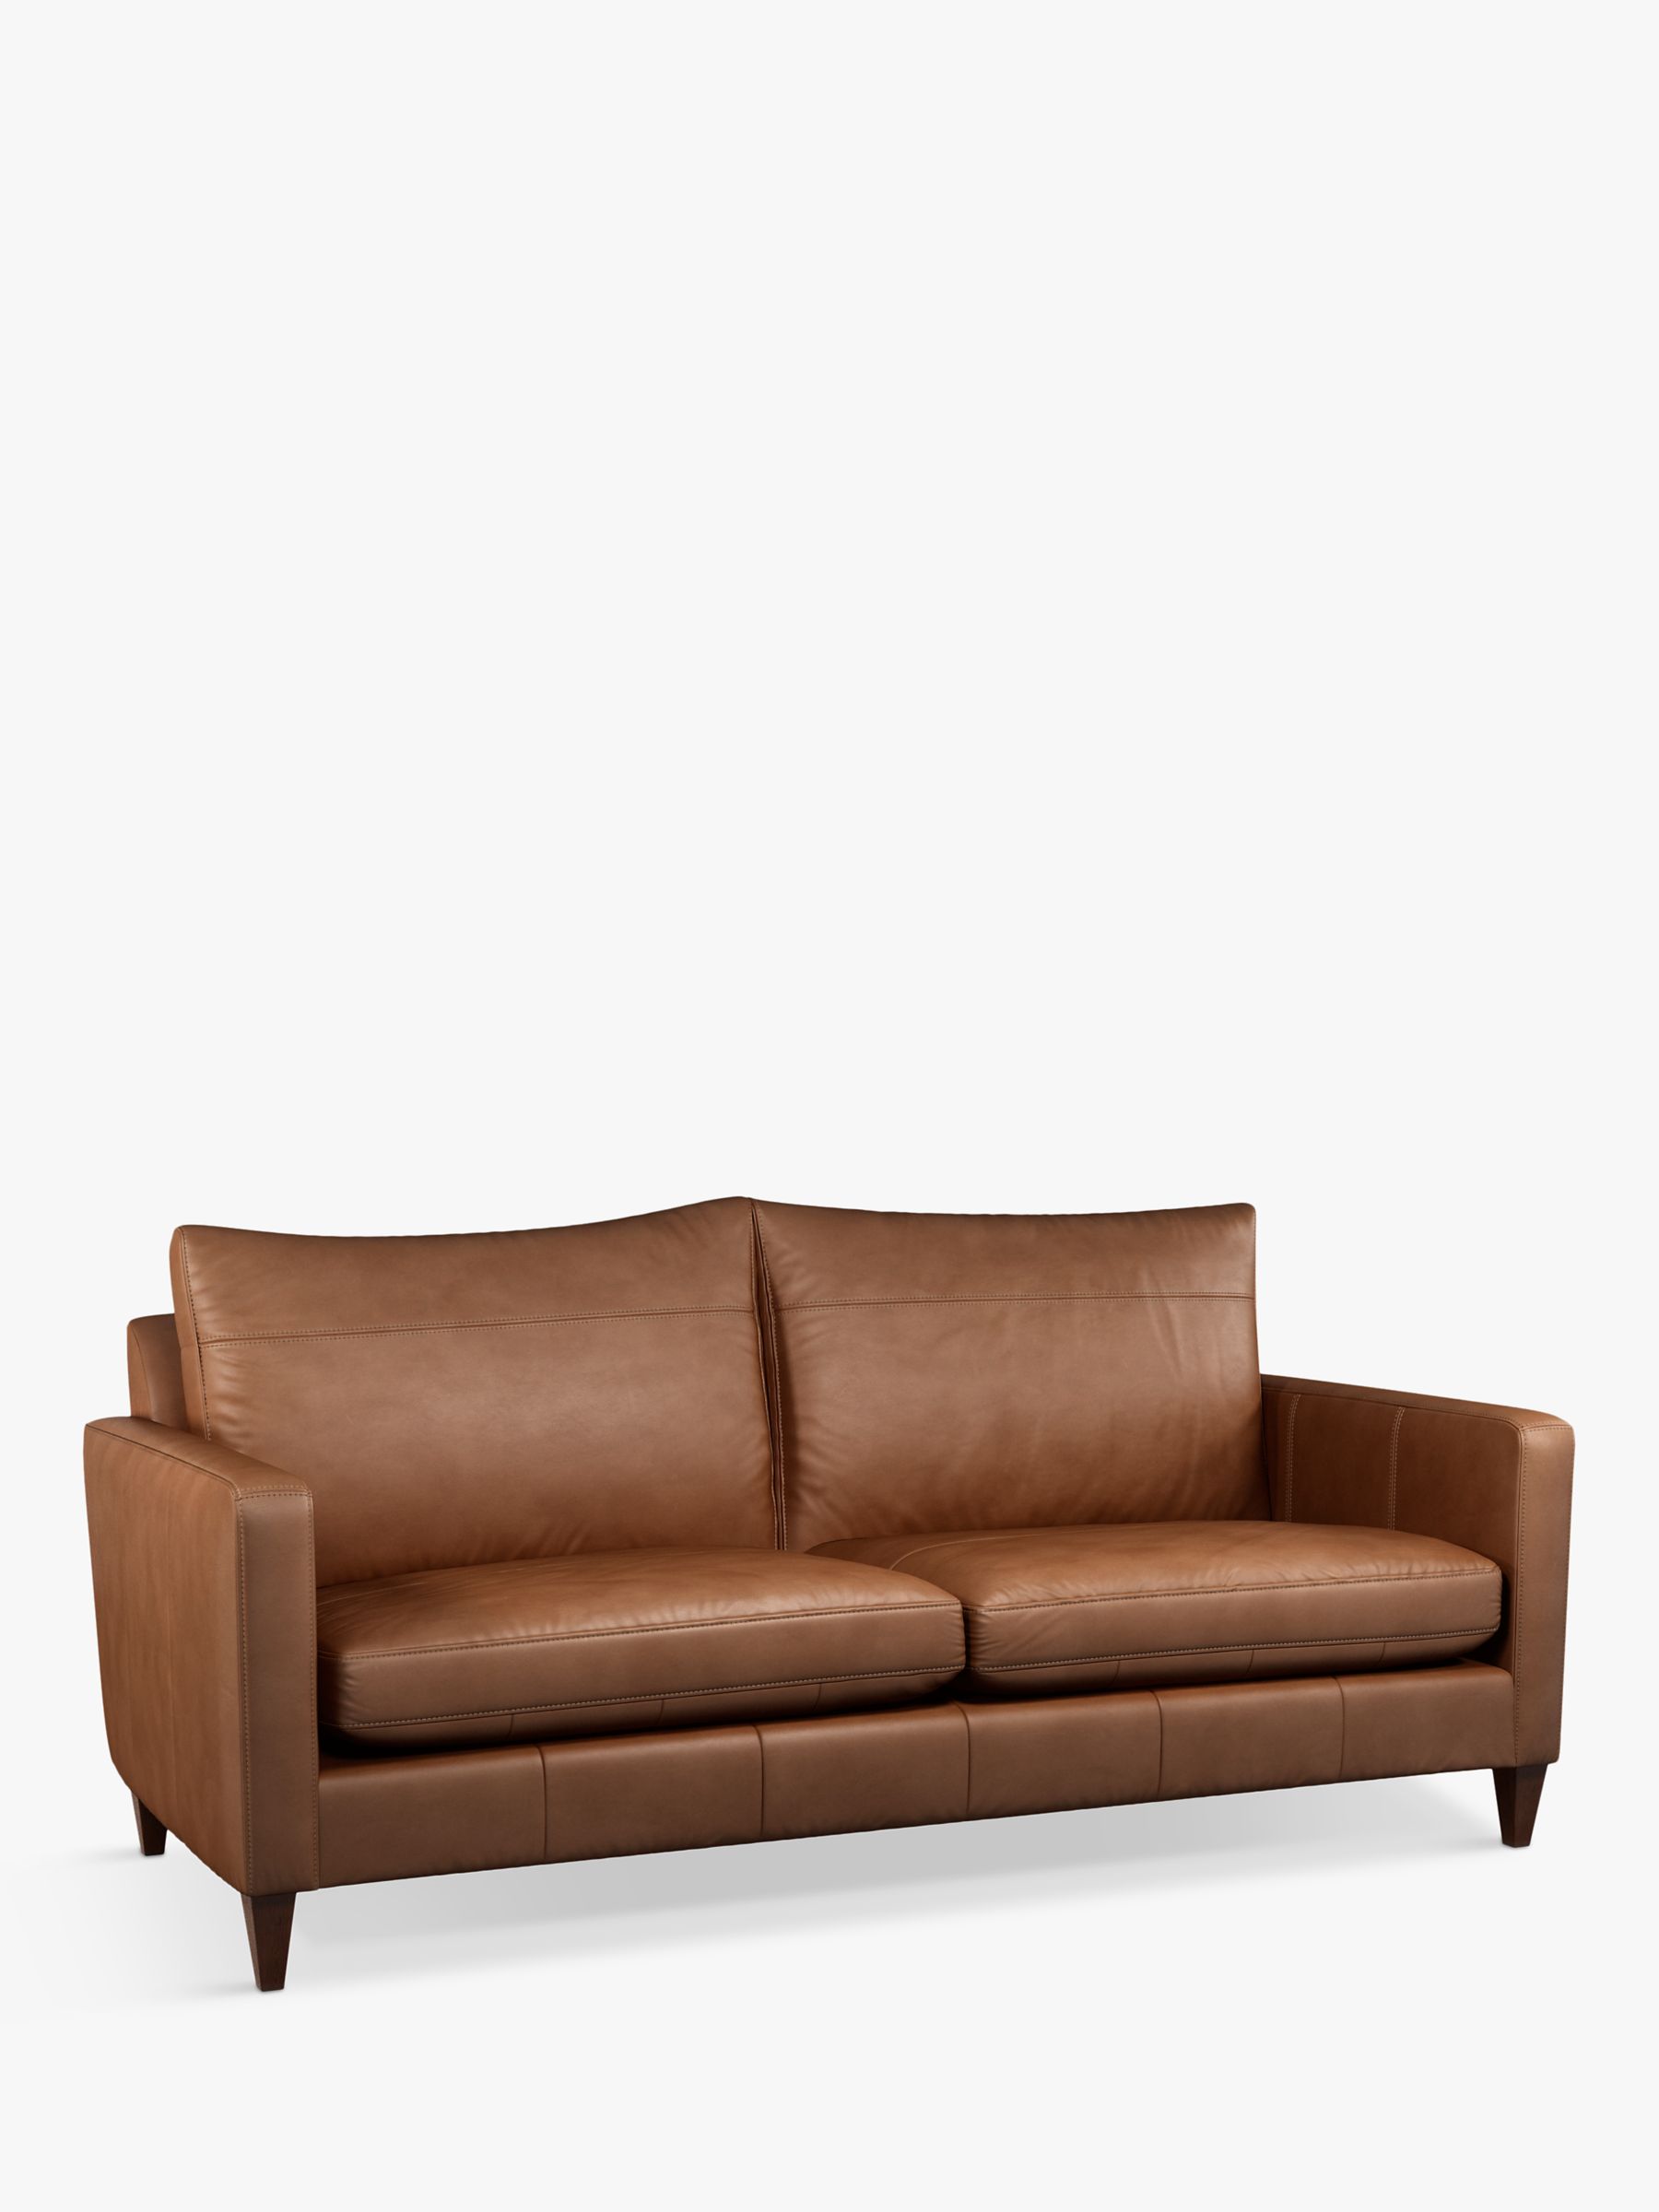 Bailey Range, John Lewis Bailey Large 3 Seater Leather Sofa, Dark Leg, Sellvagio Cognac